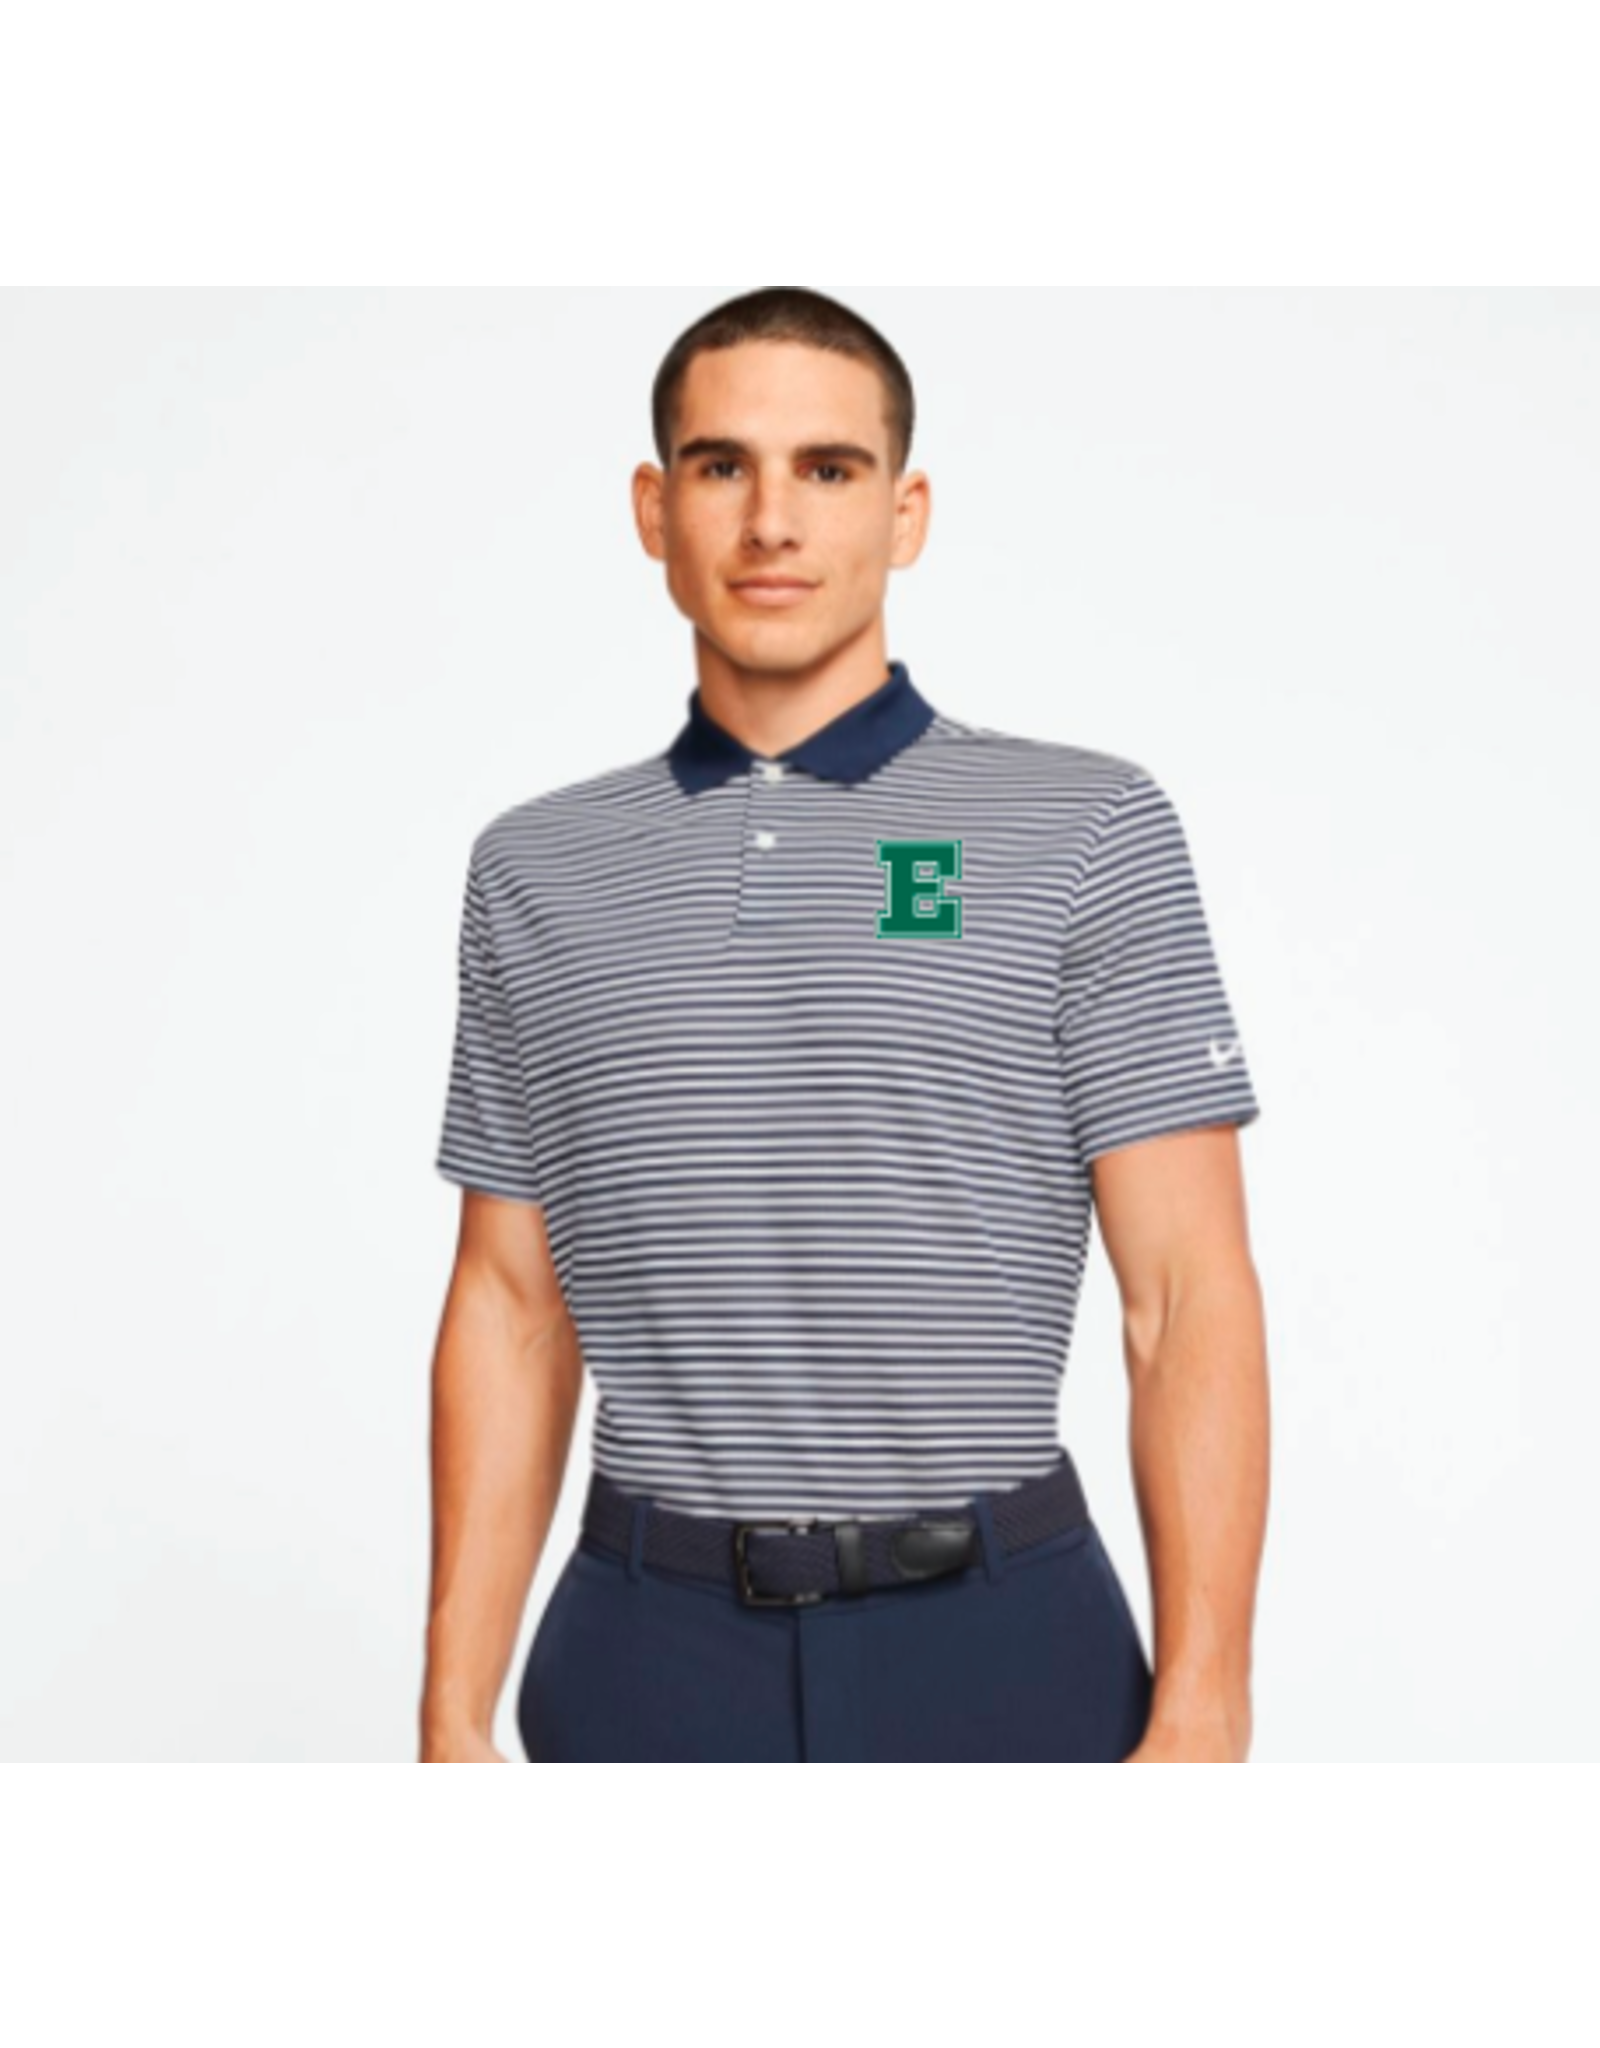 Nike Navy Stripe Men's Golf Polo with E logo